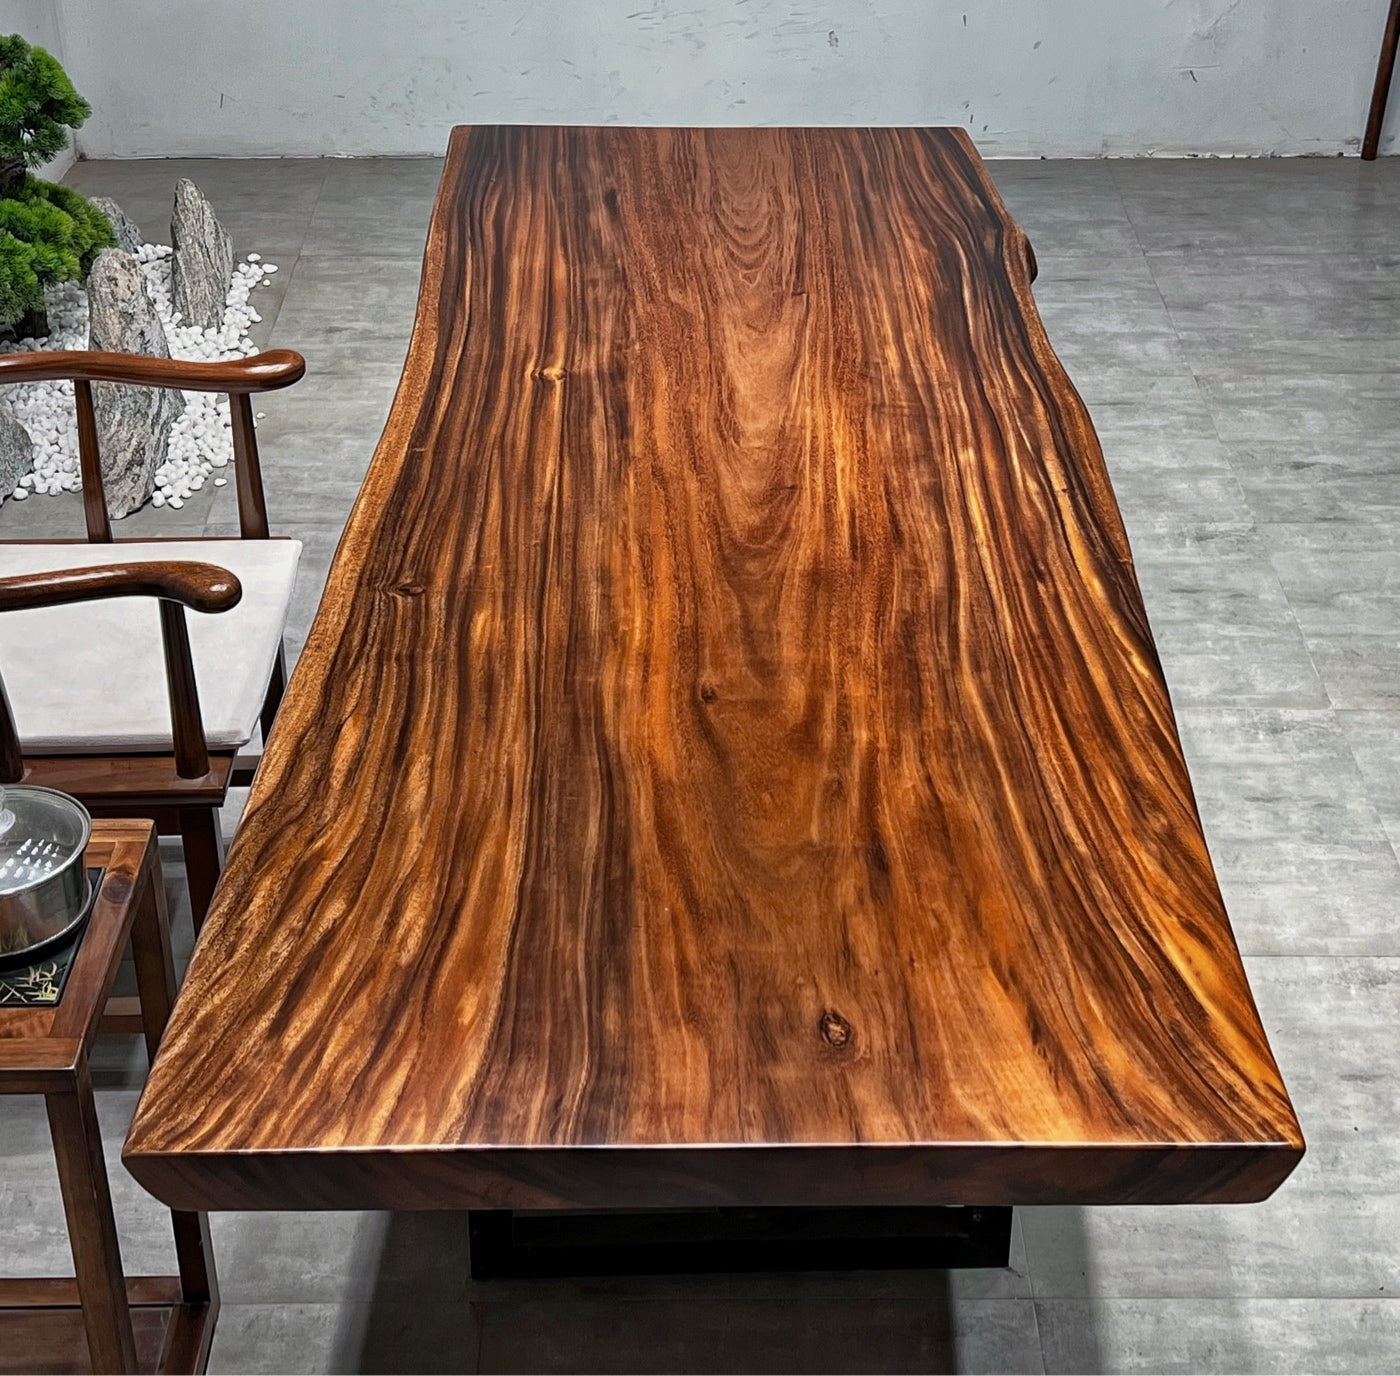 Slab table, Acacia wood table - South American black walnut